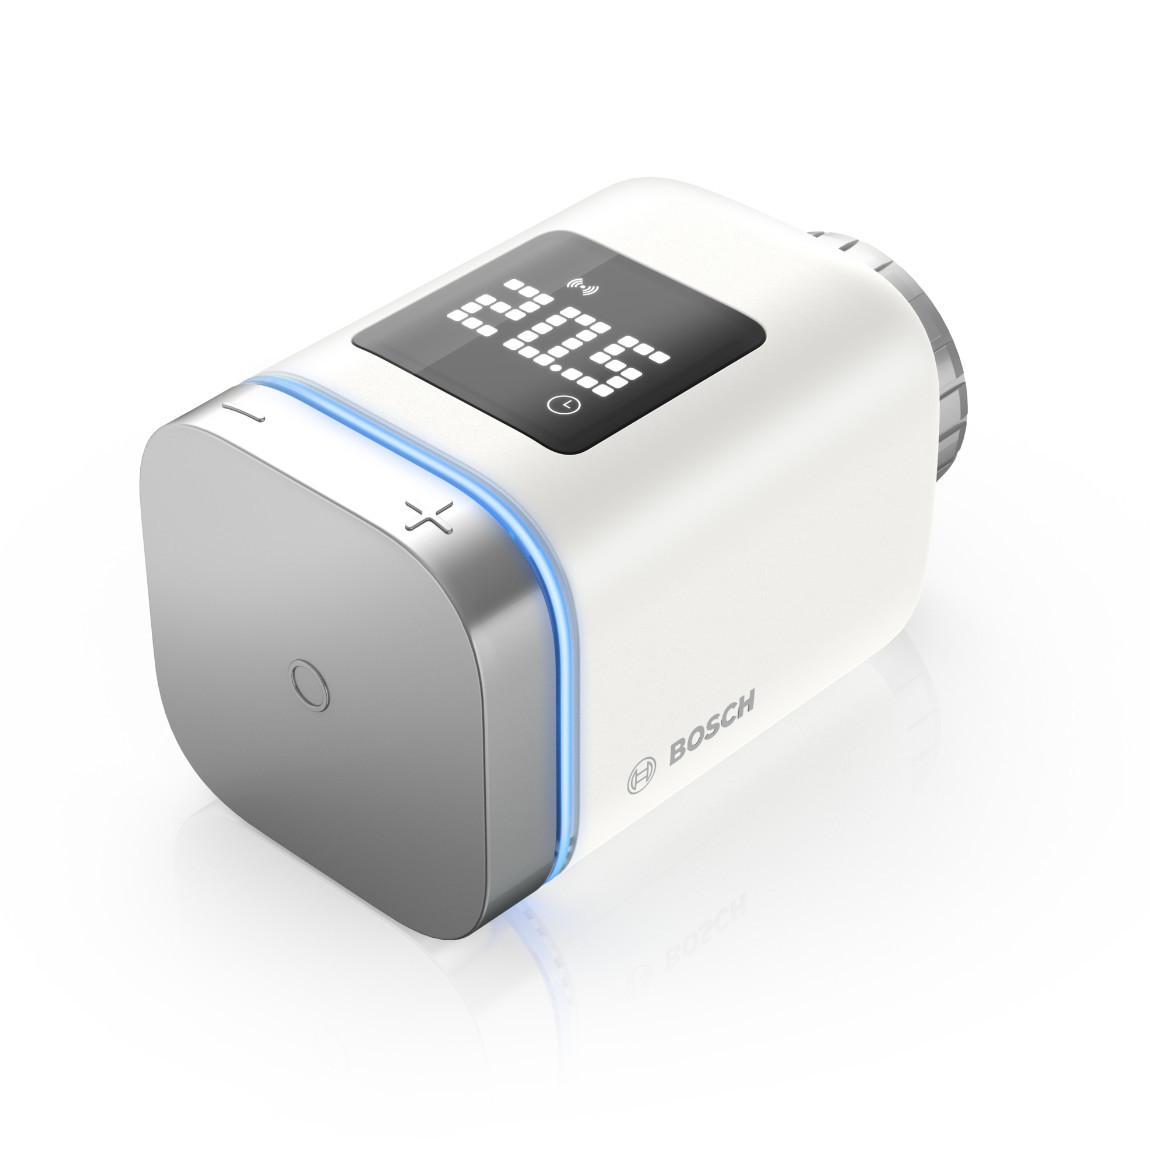 Bosch Smart Home - Thermostat_schraeg blaue LED